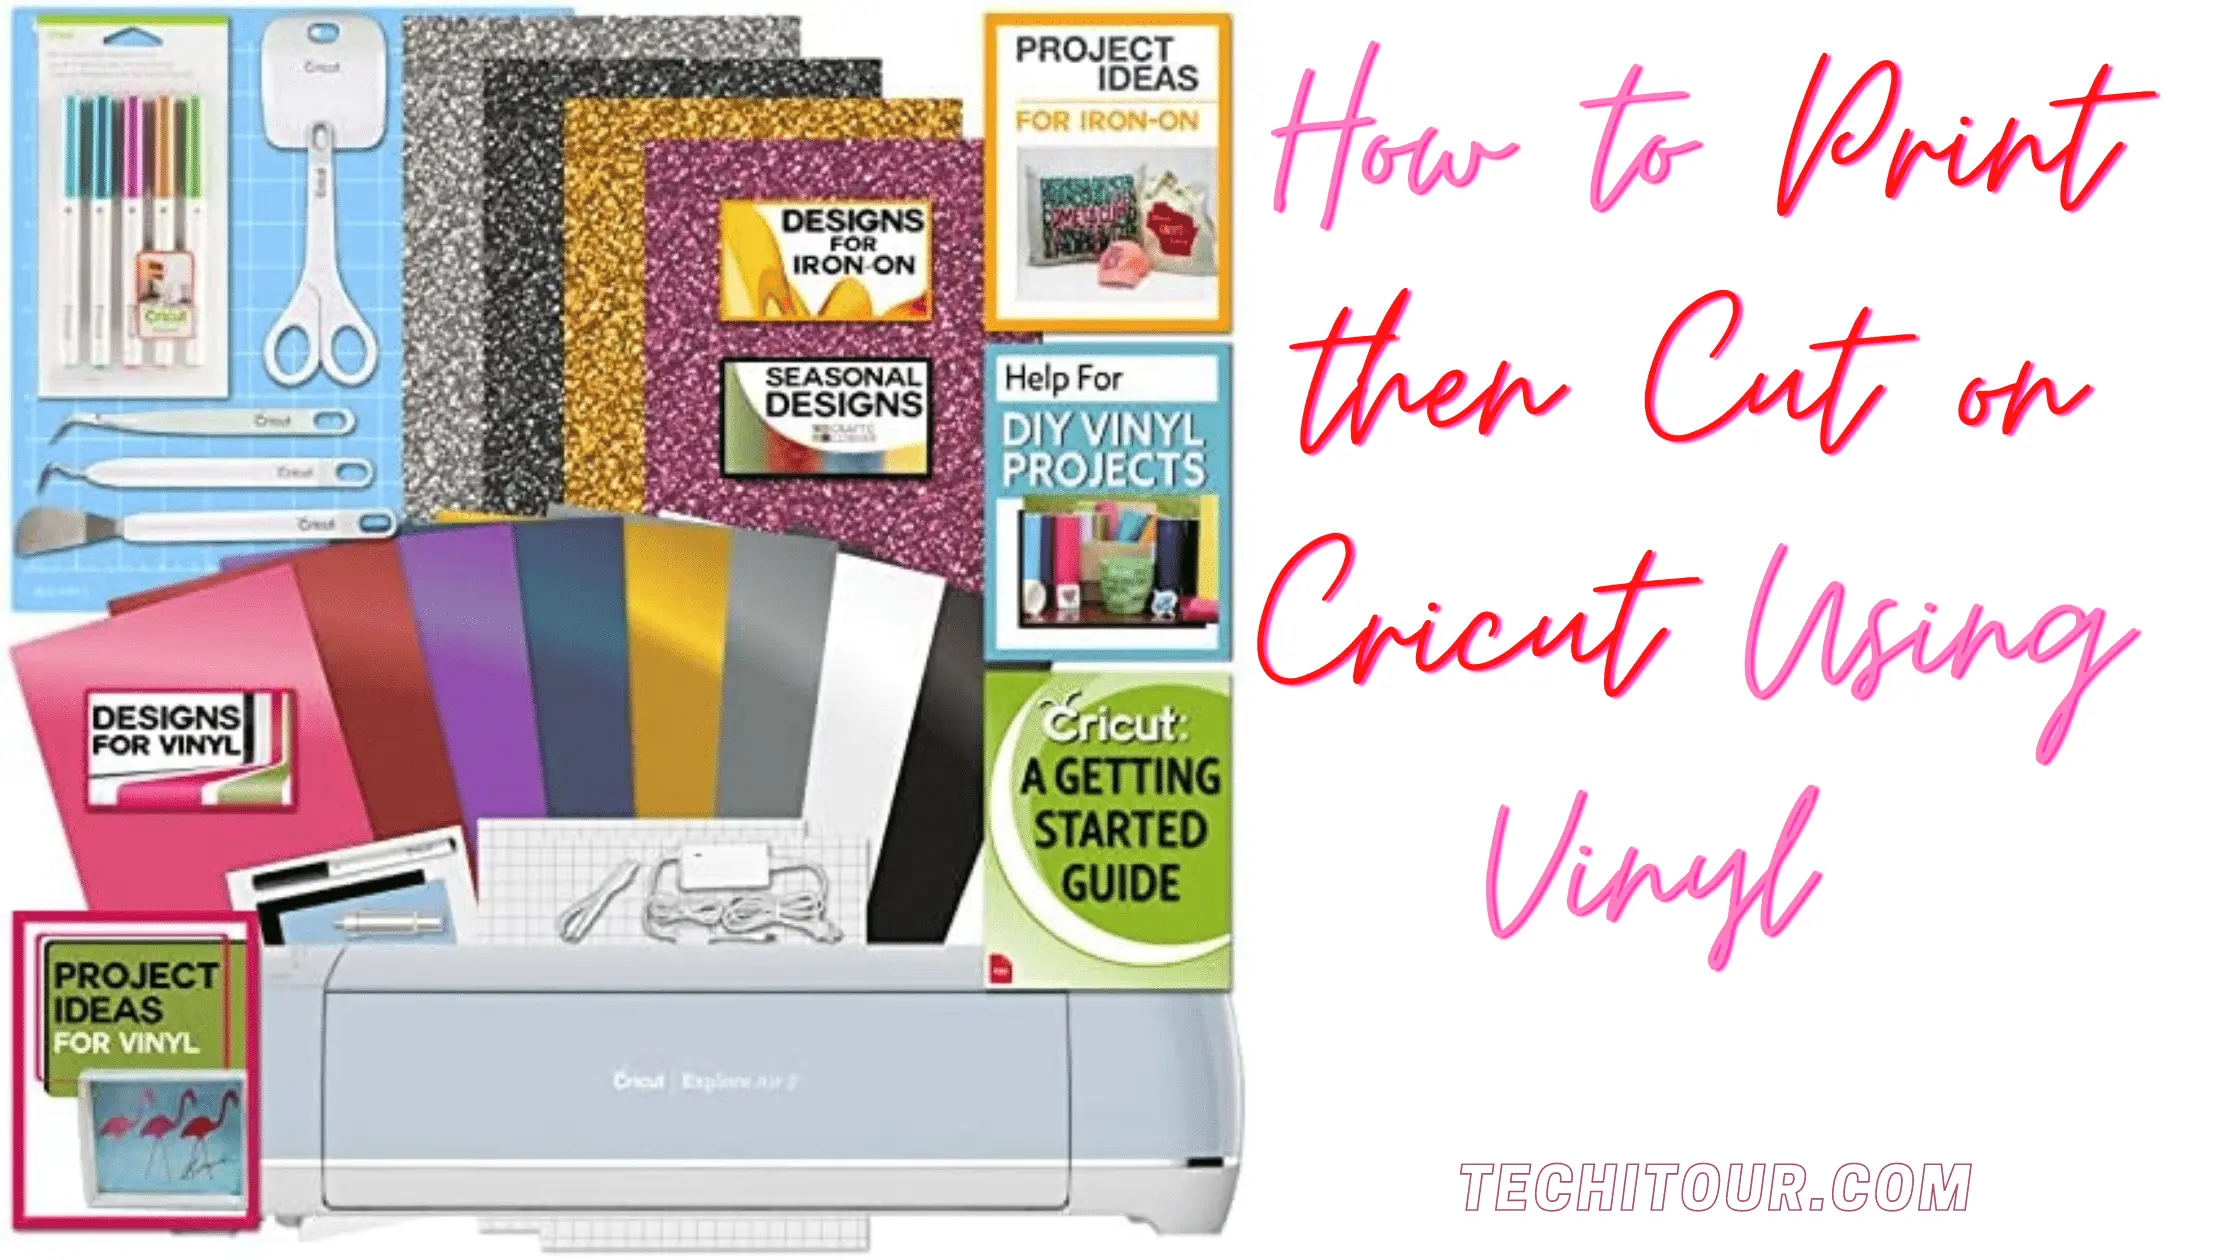 How to Print then Cut on Cricut Using Vinyl